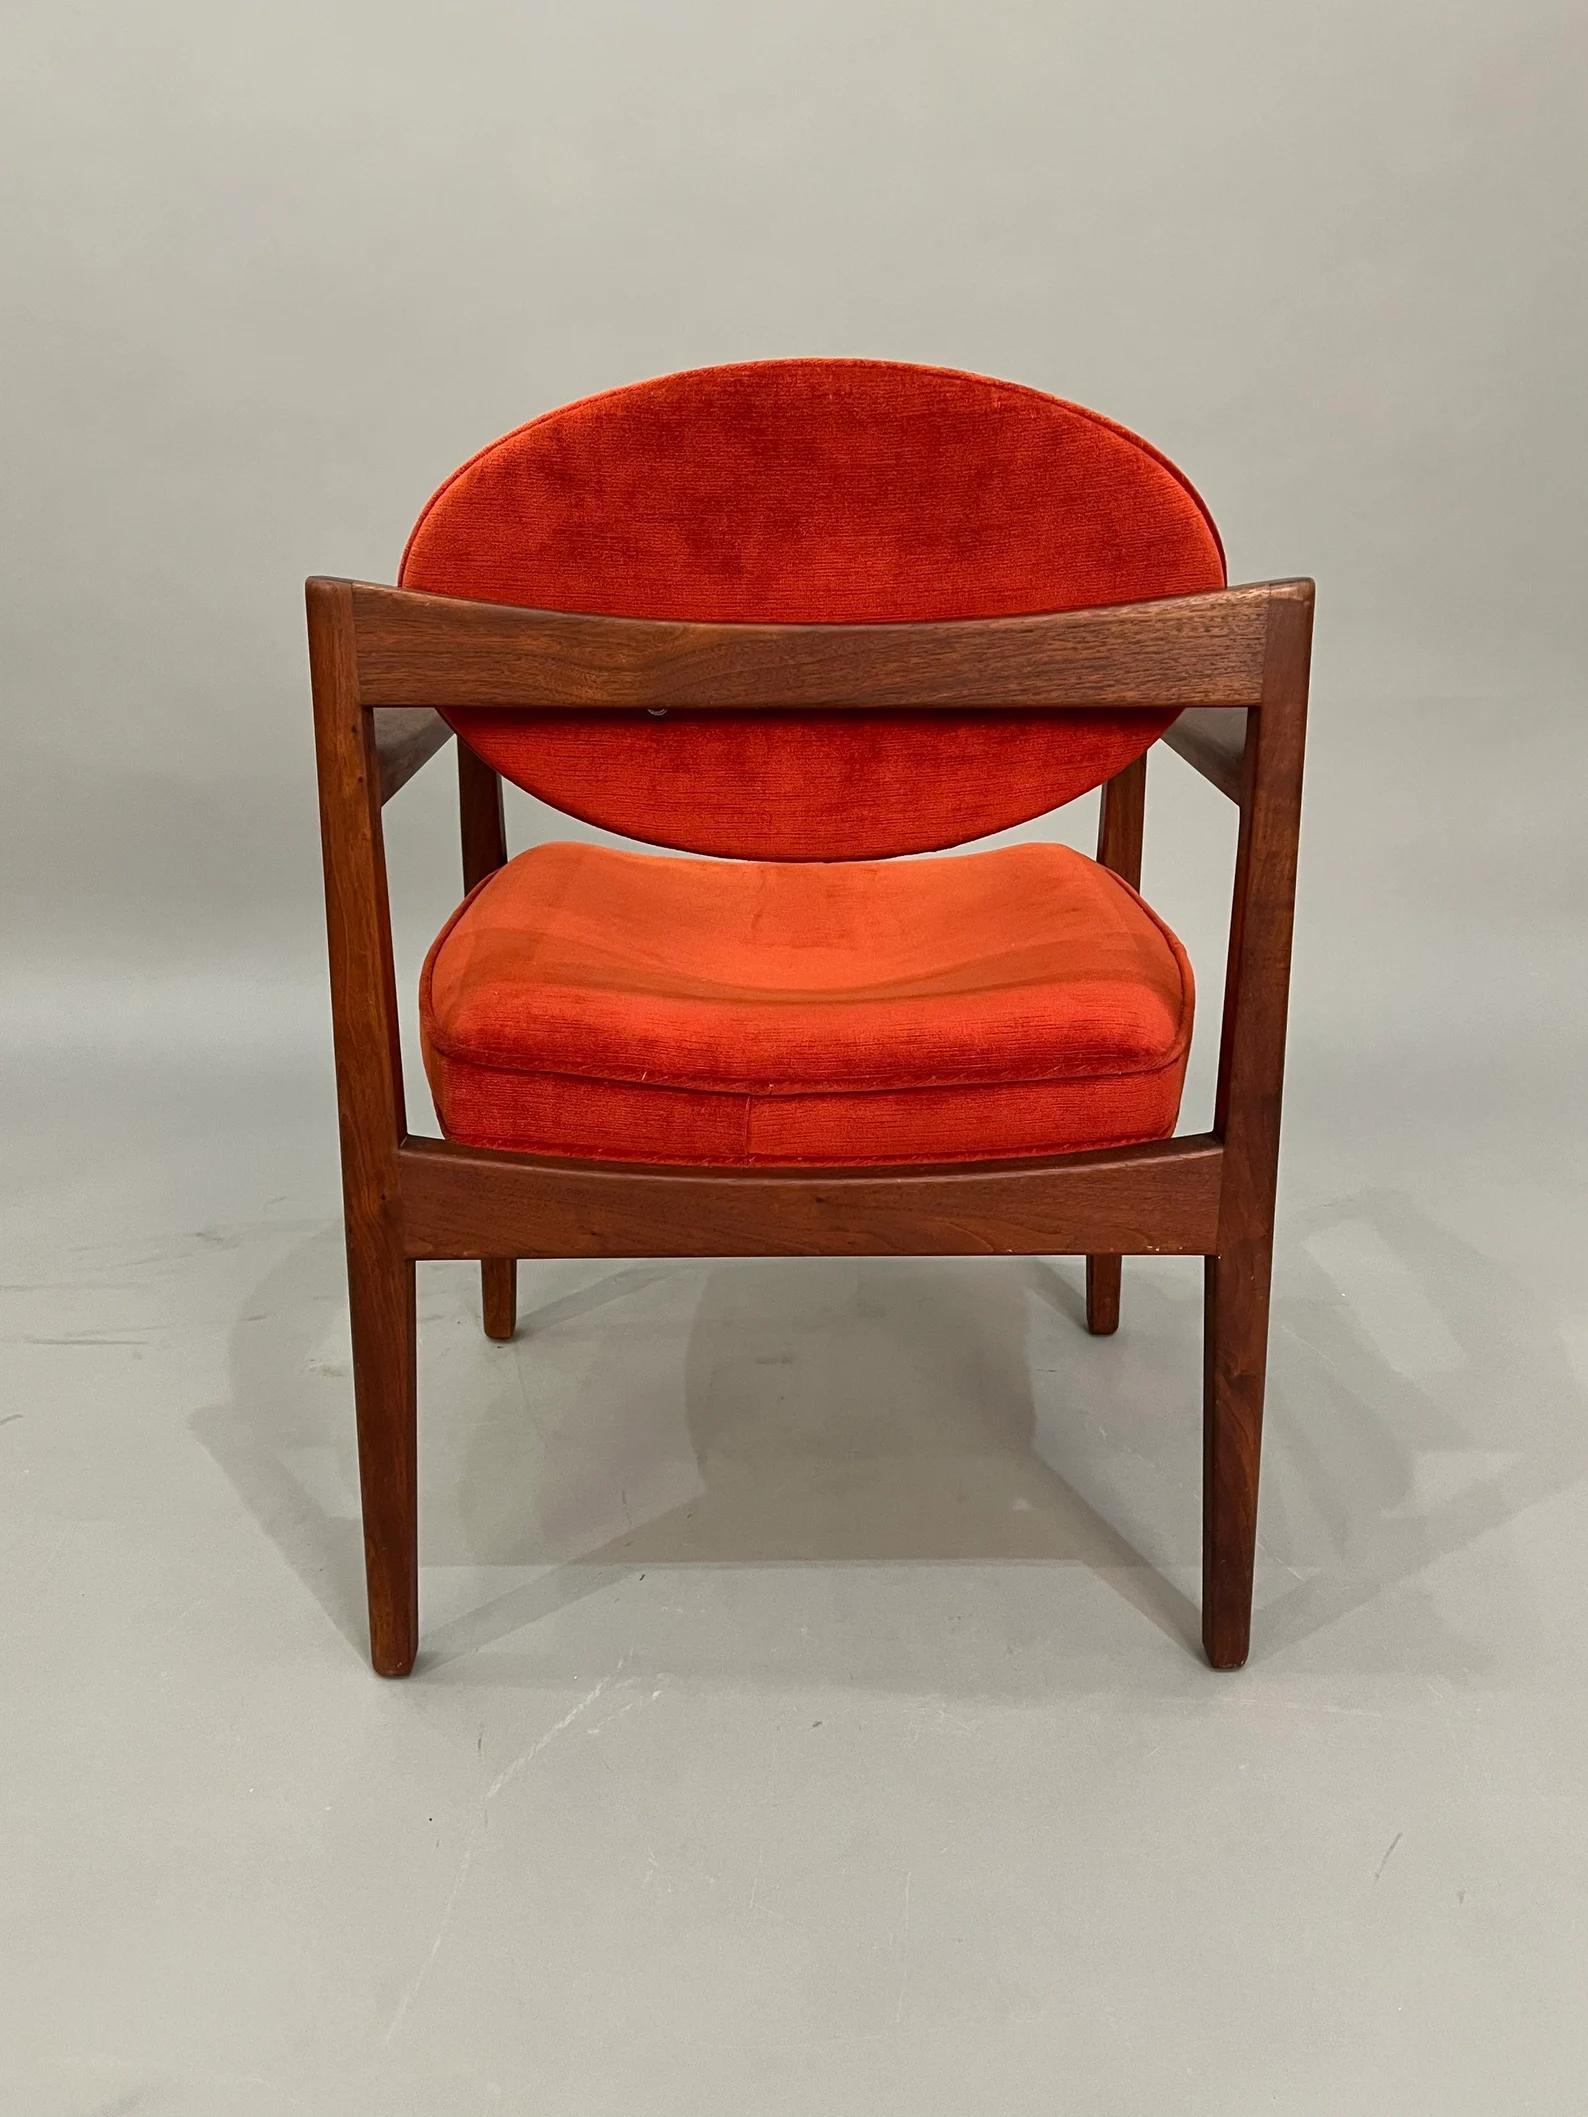 Danish Midcentury, Jens Risom Office / Dining Chair Original Upholstery 1960s